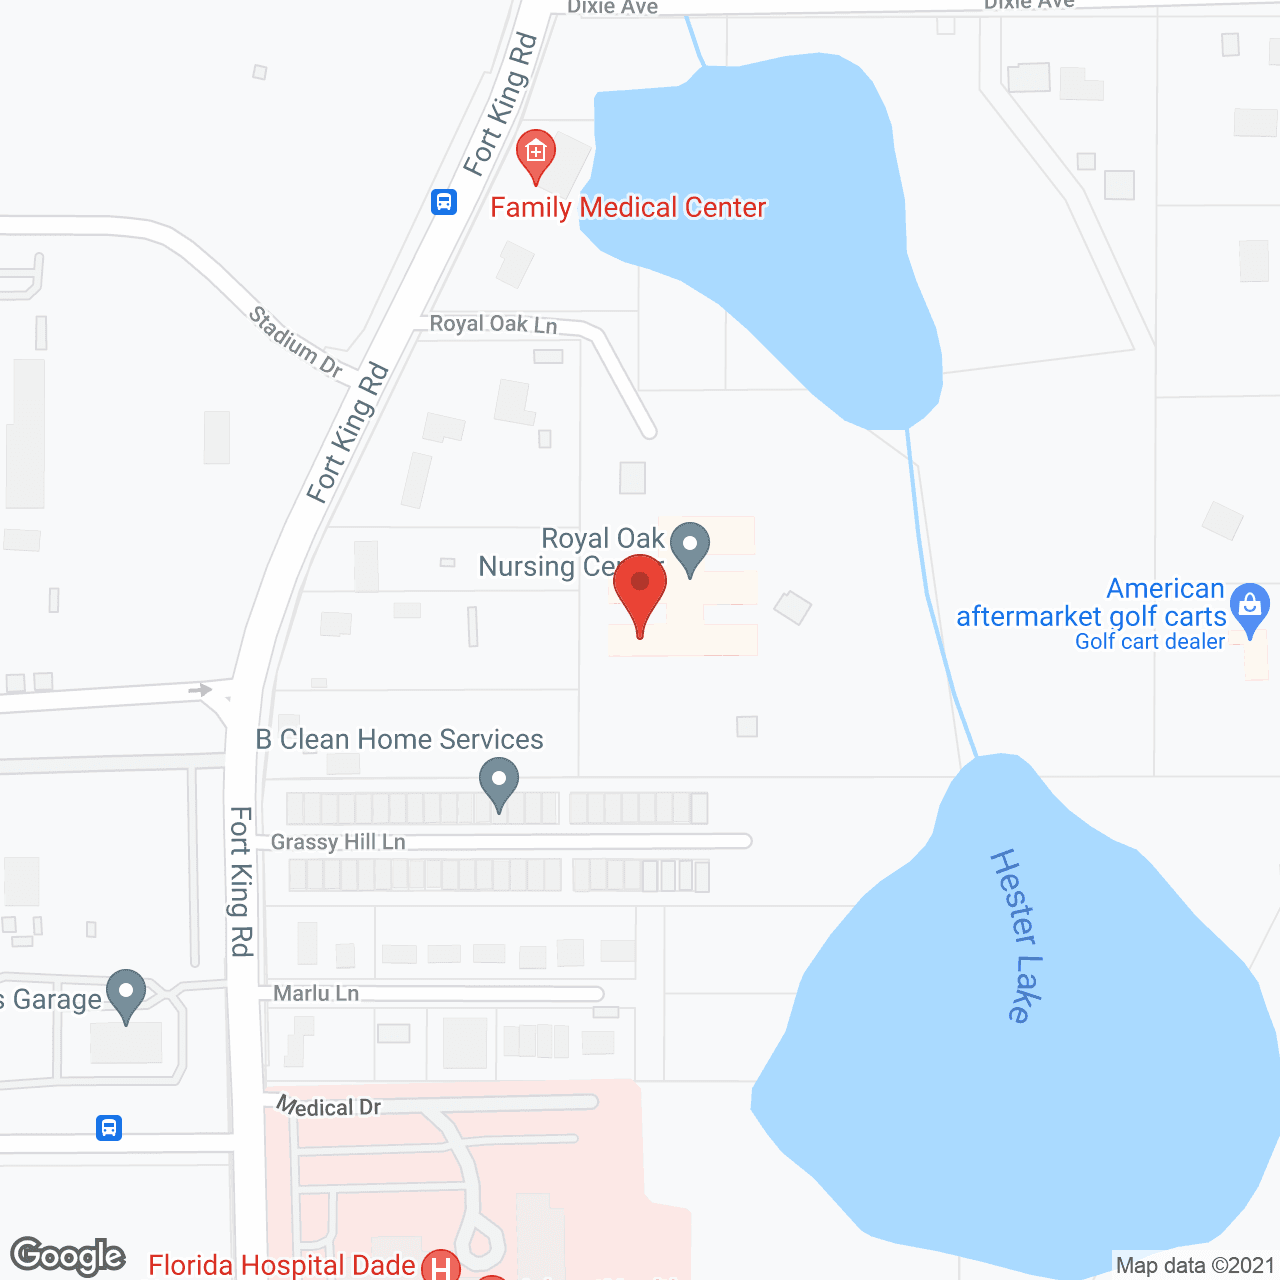 Royal Oak Nursing Center in google map